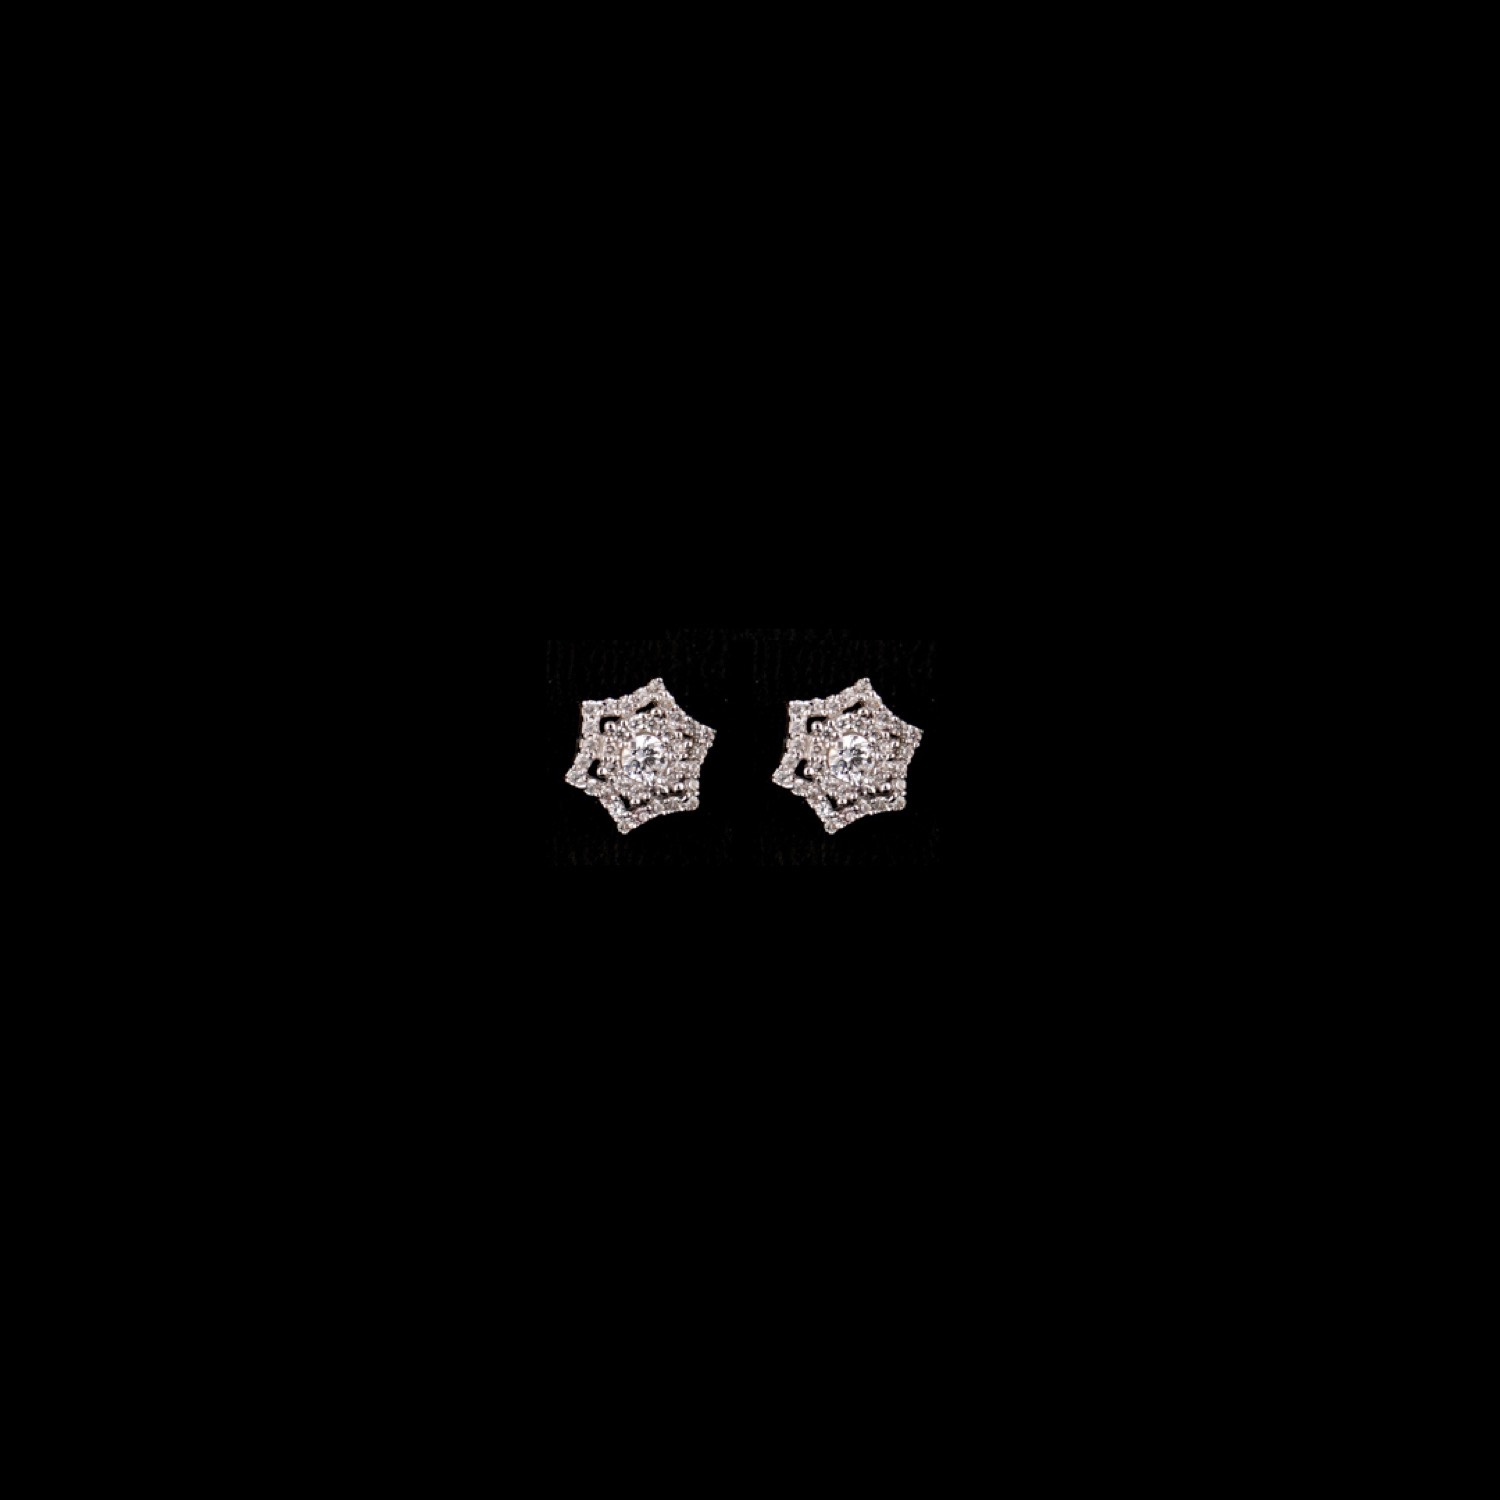 varam_earrings_102022_star_shaped_stud_with_white_stone_silver_earrings-1